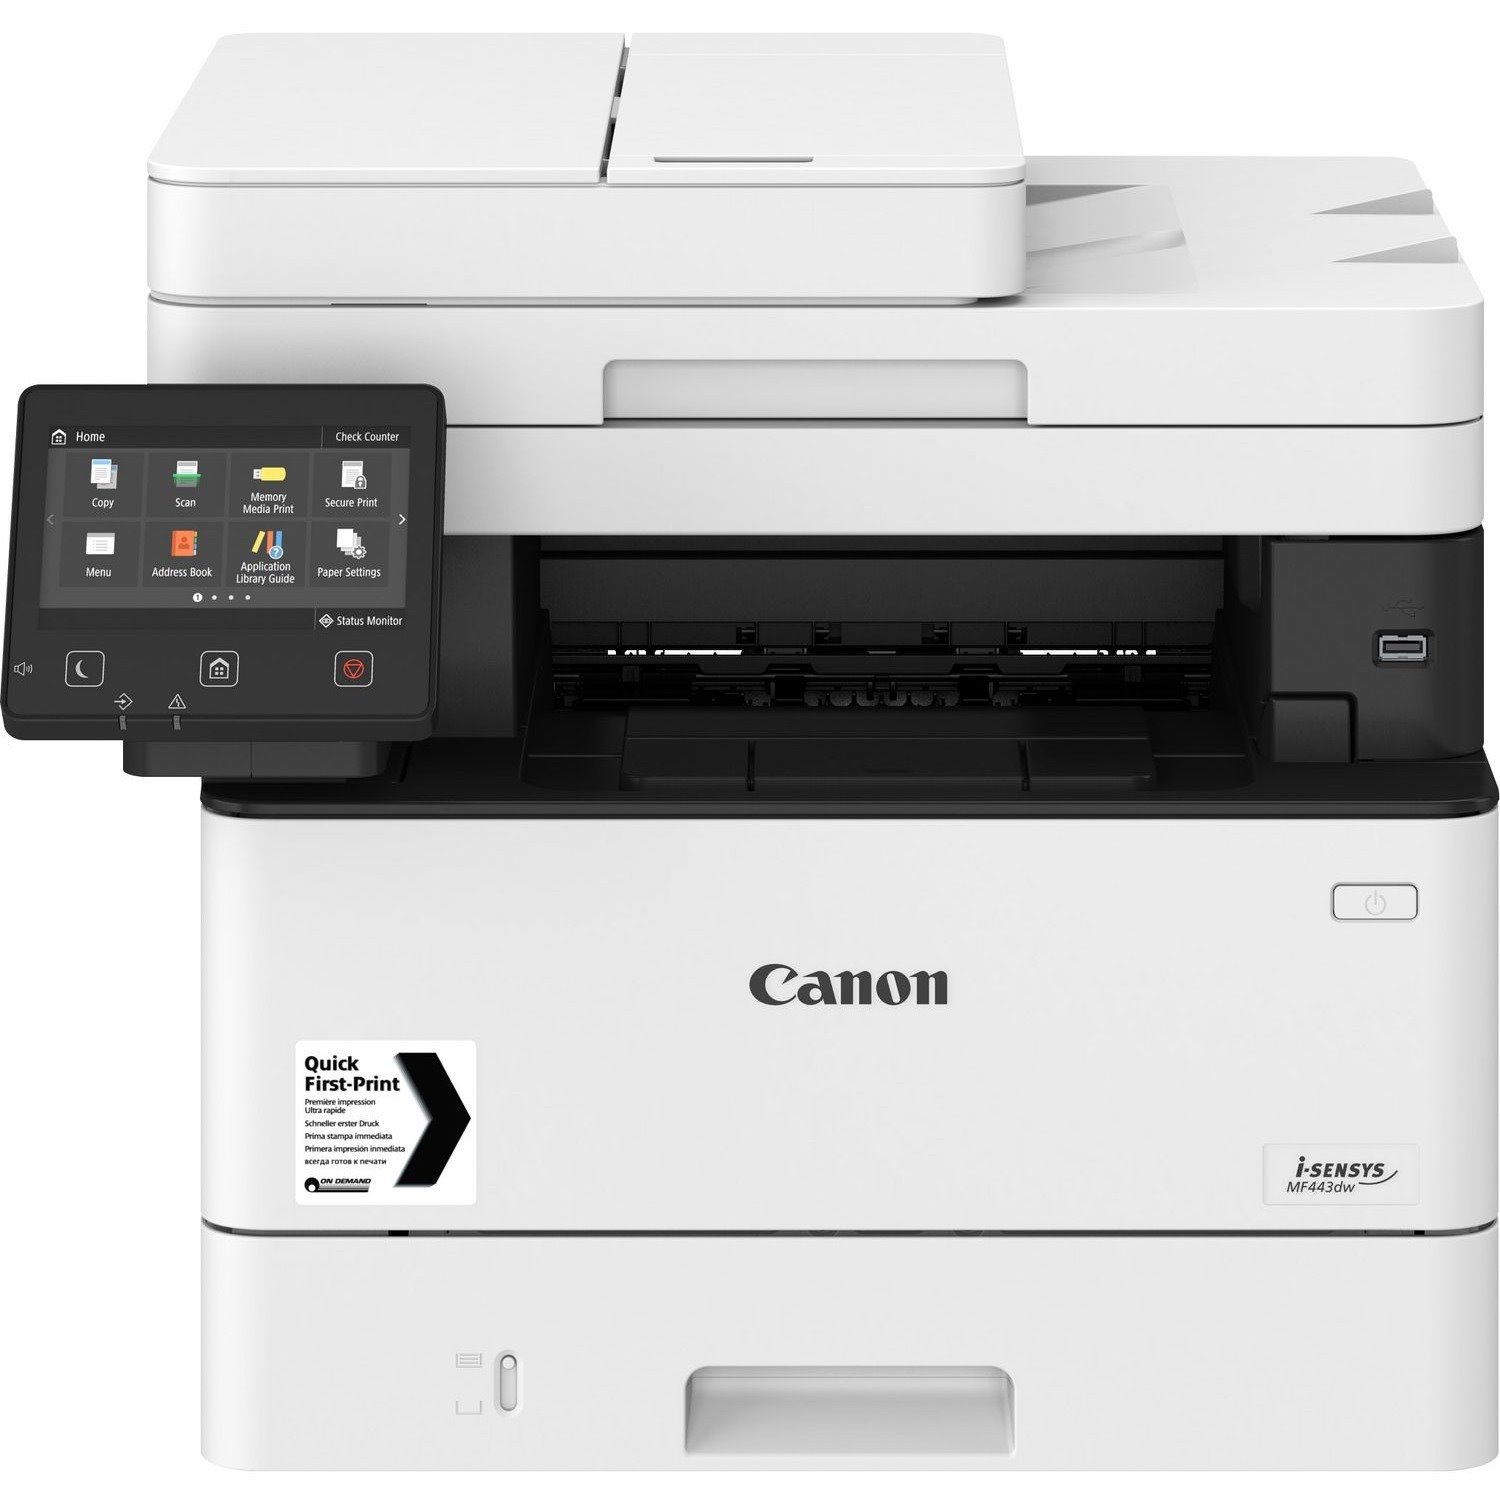 Canon i-SENSYS MF440 MF443dw Wireless Laser Multifunction Printer - Monochrome